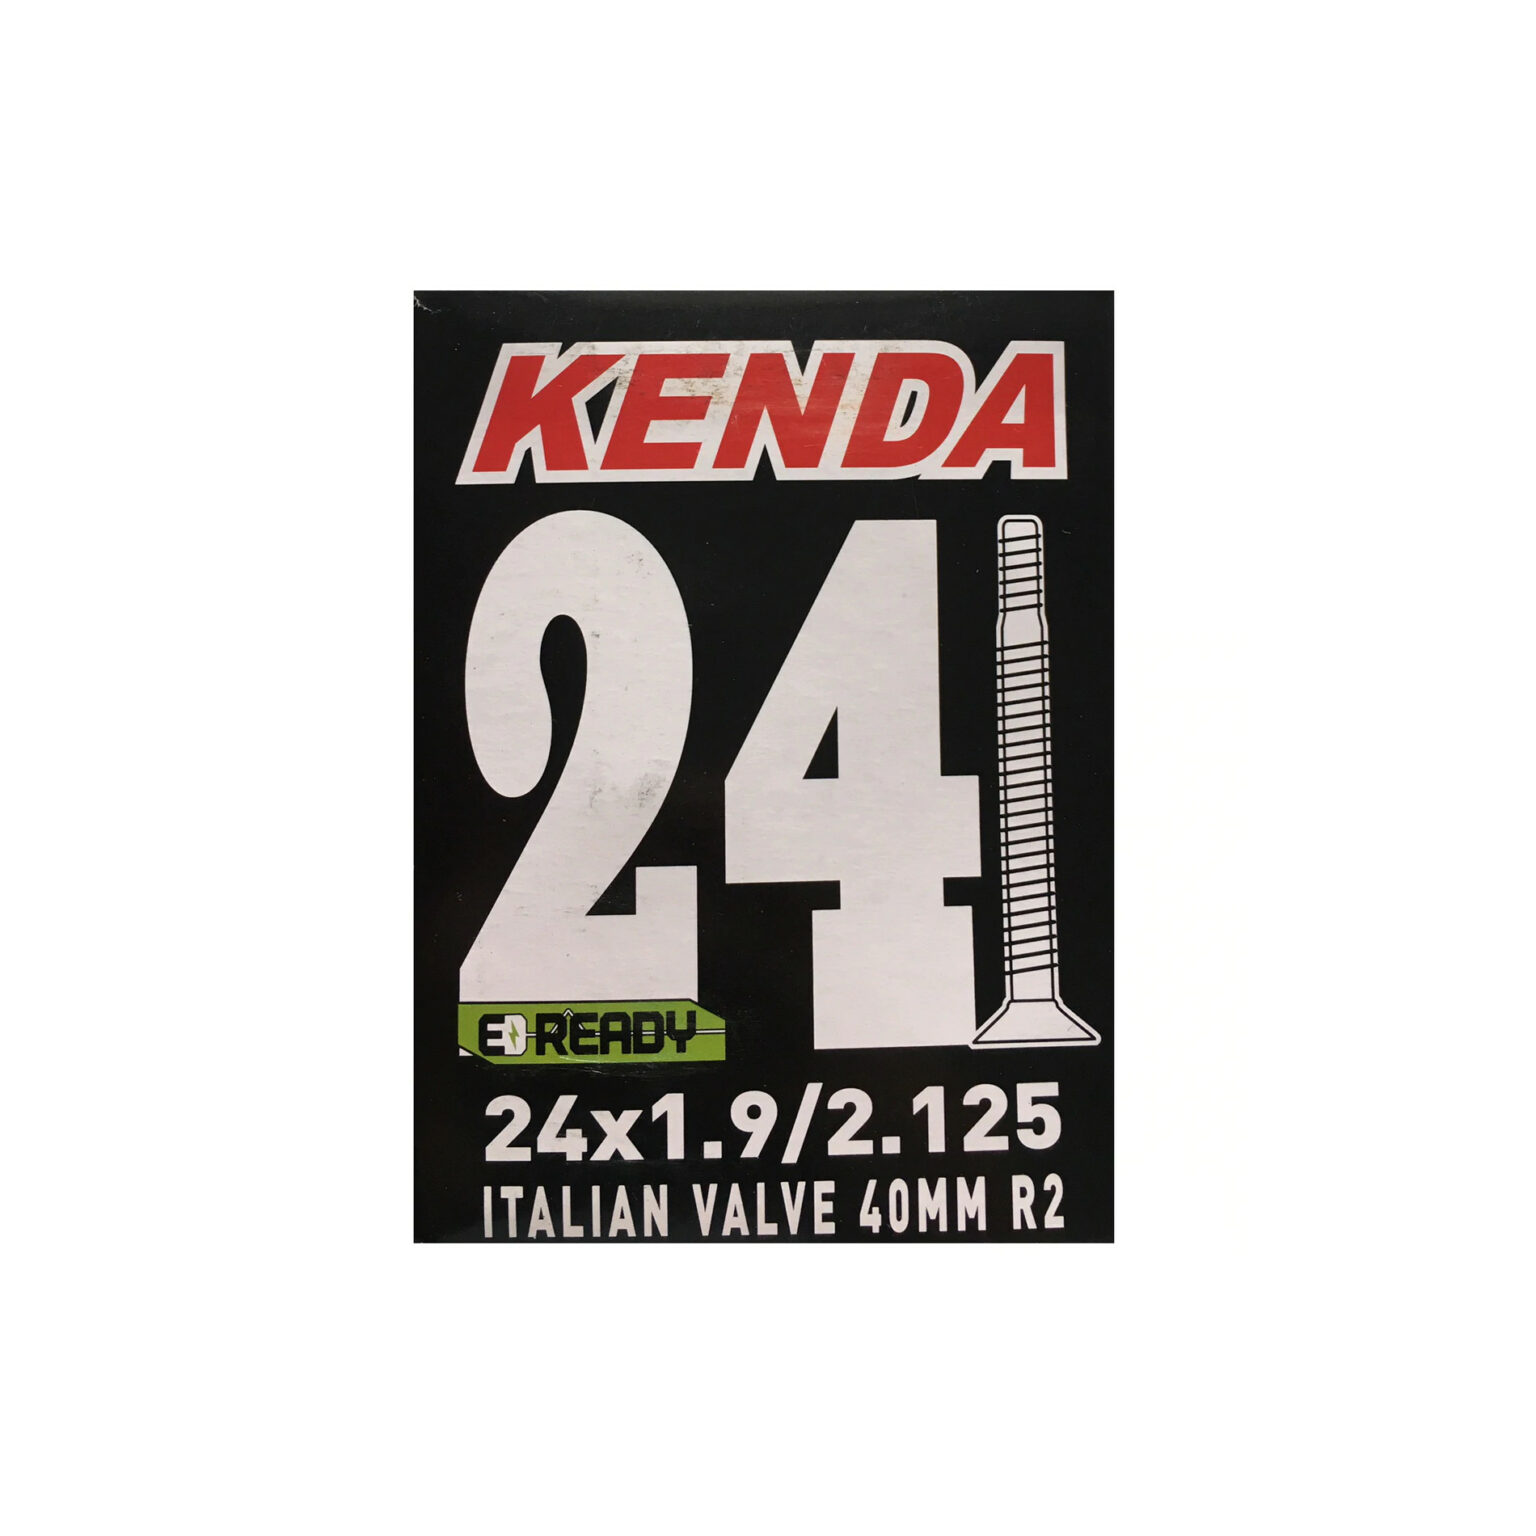 Camera d’aria Kenda 24×1.9/2.125 – Valvola Italia 40 mm